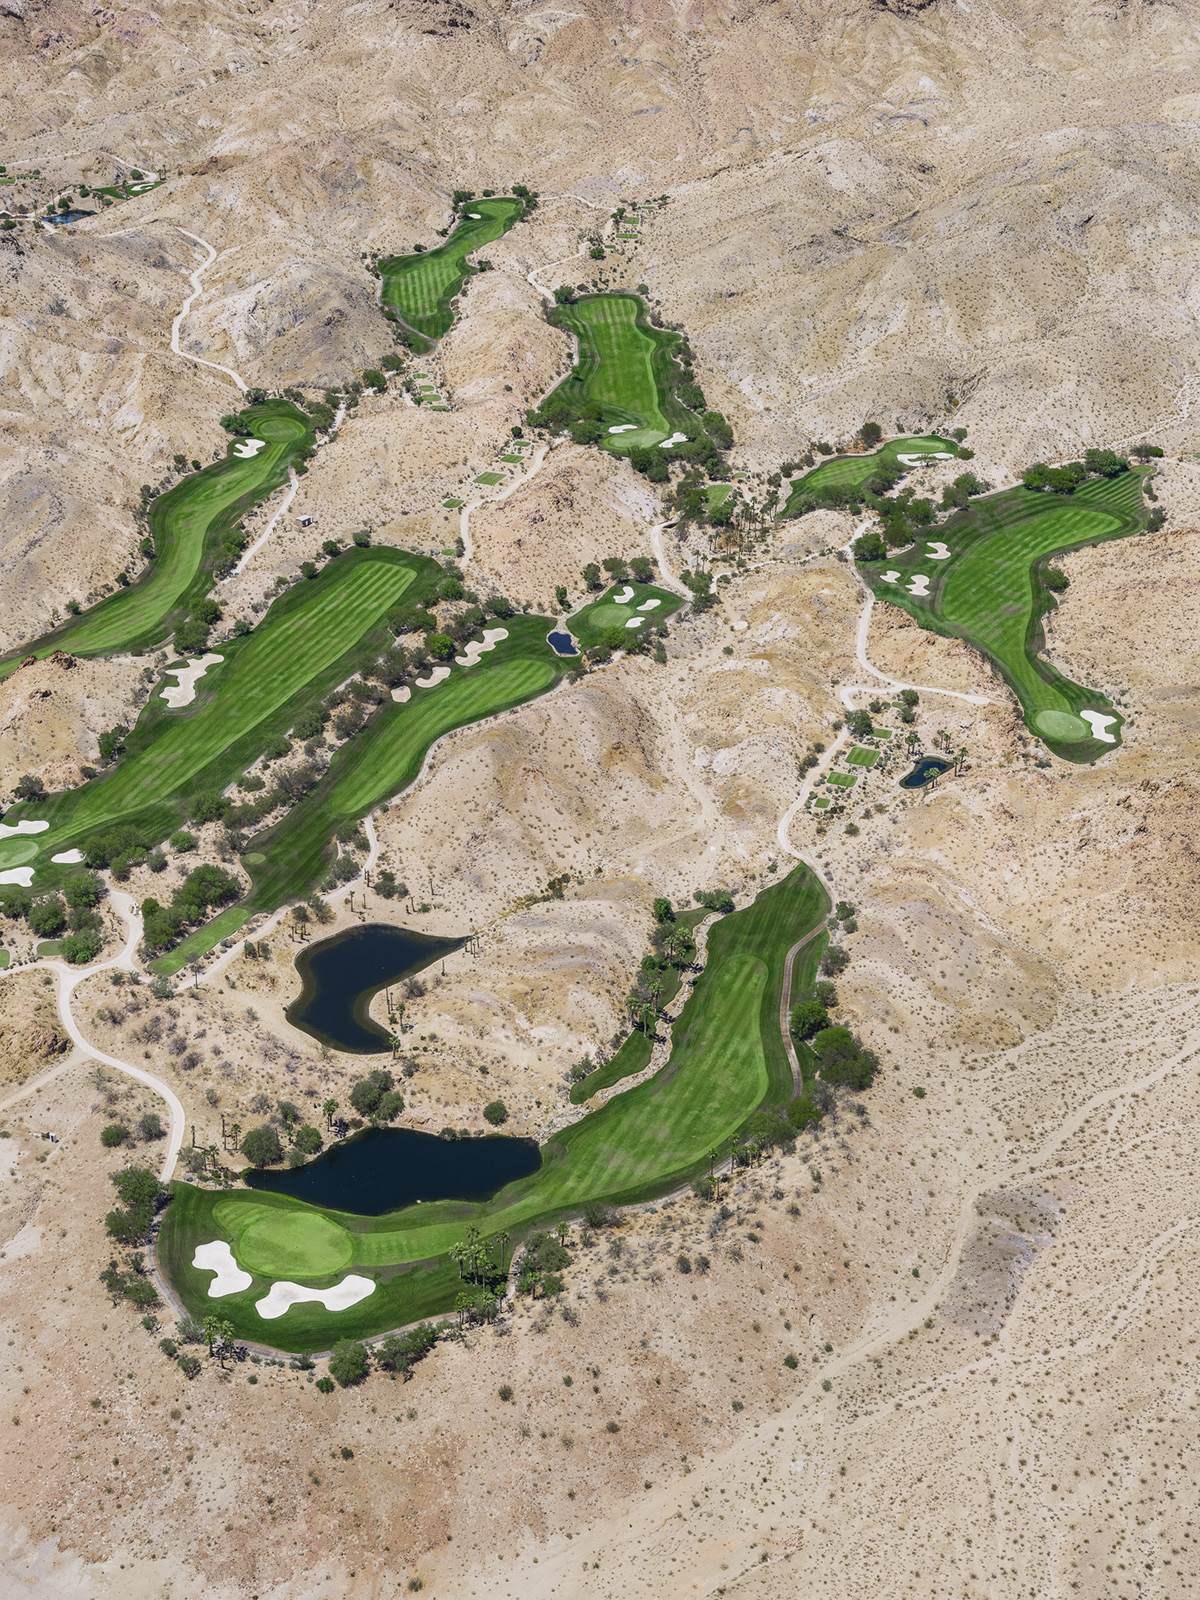 golf course golf water desert Las Vegas arid dry Sustainability environment anthropocene